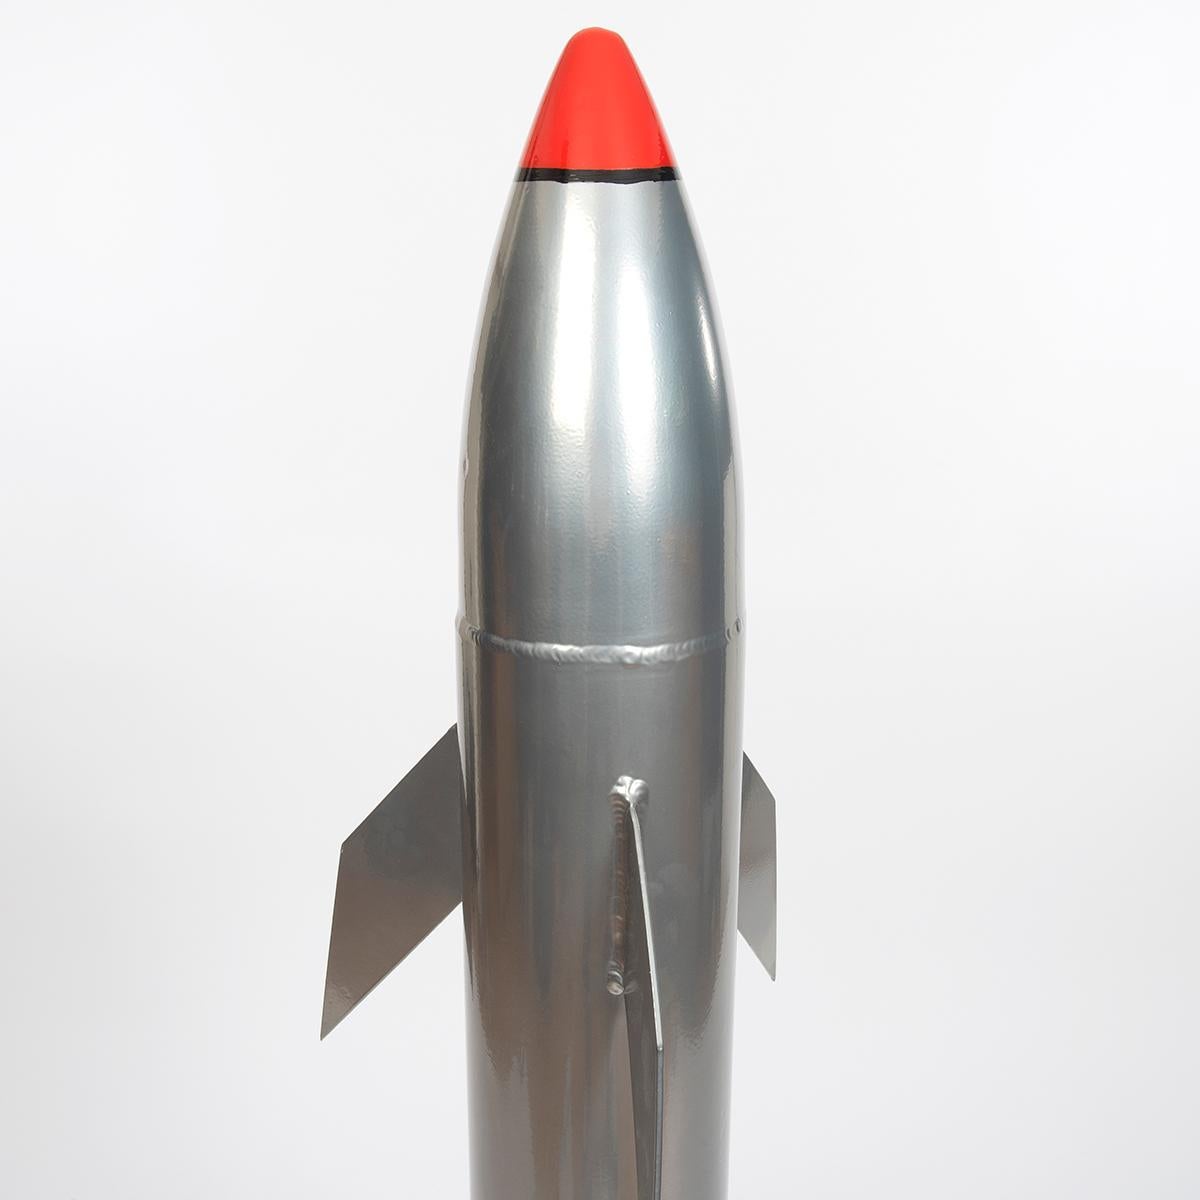 Other Aluminum Missile Display Mock Up For Sale